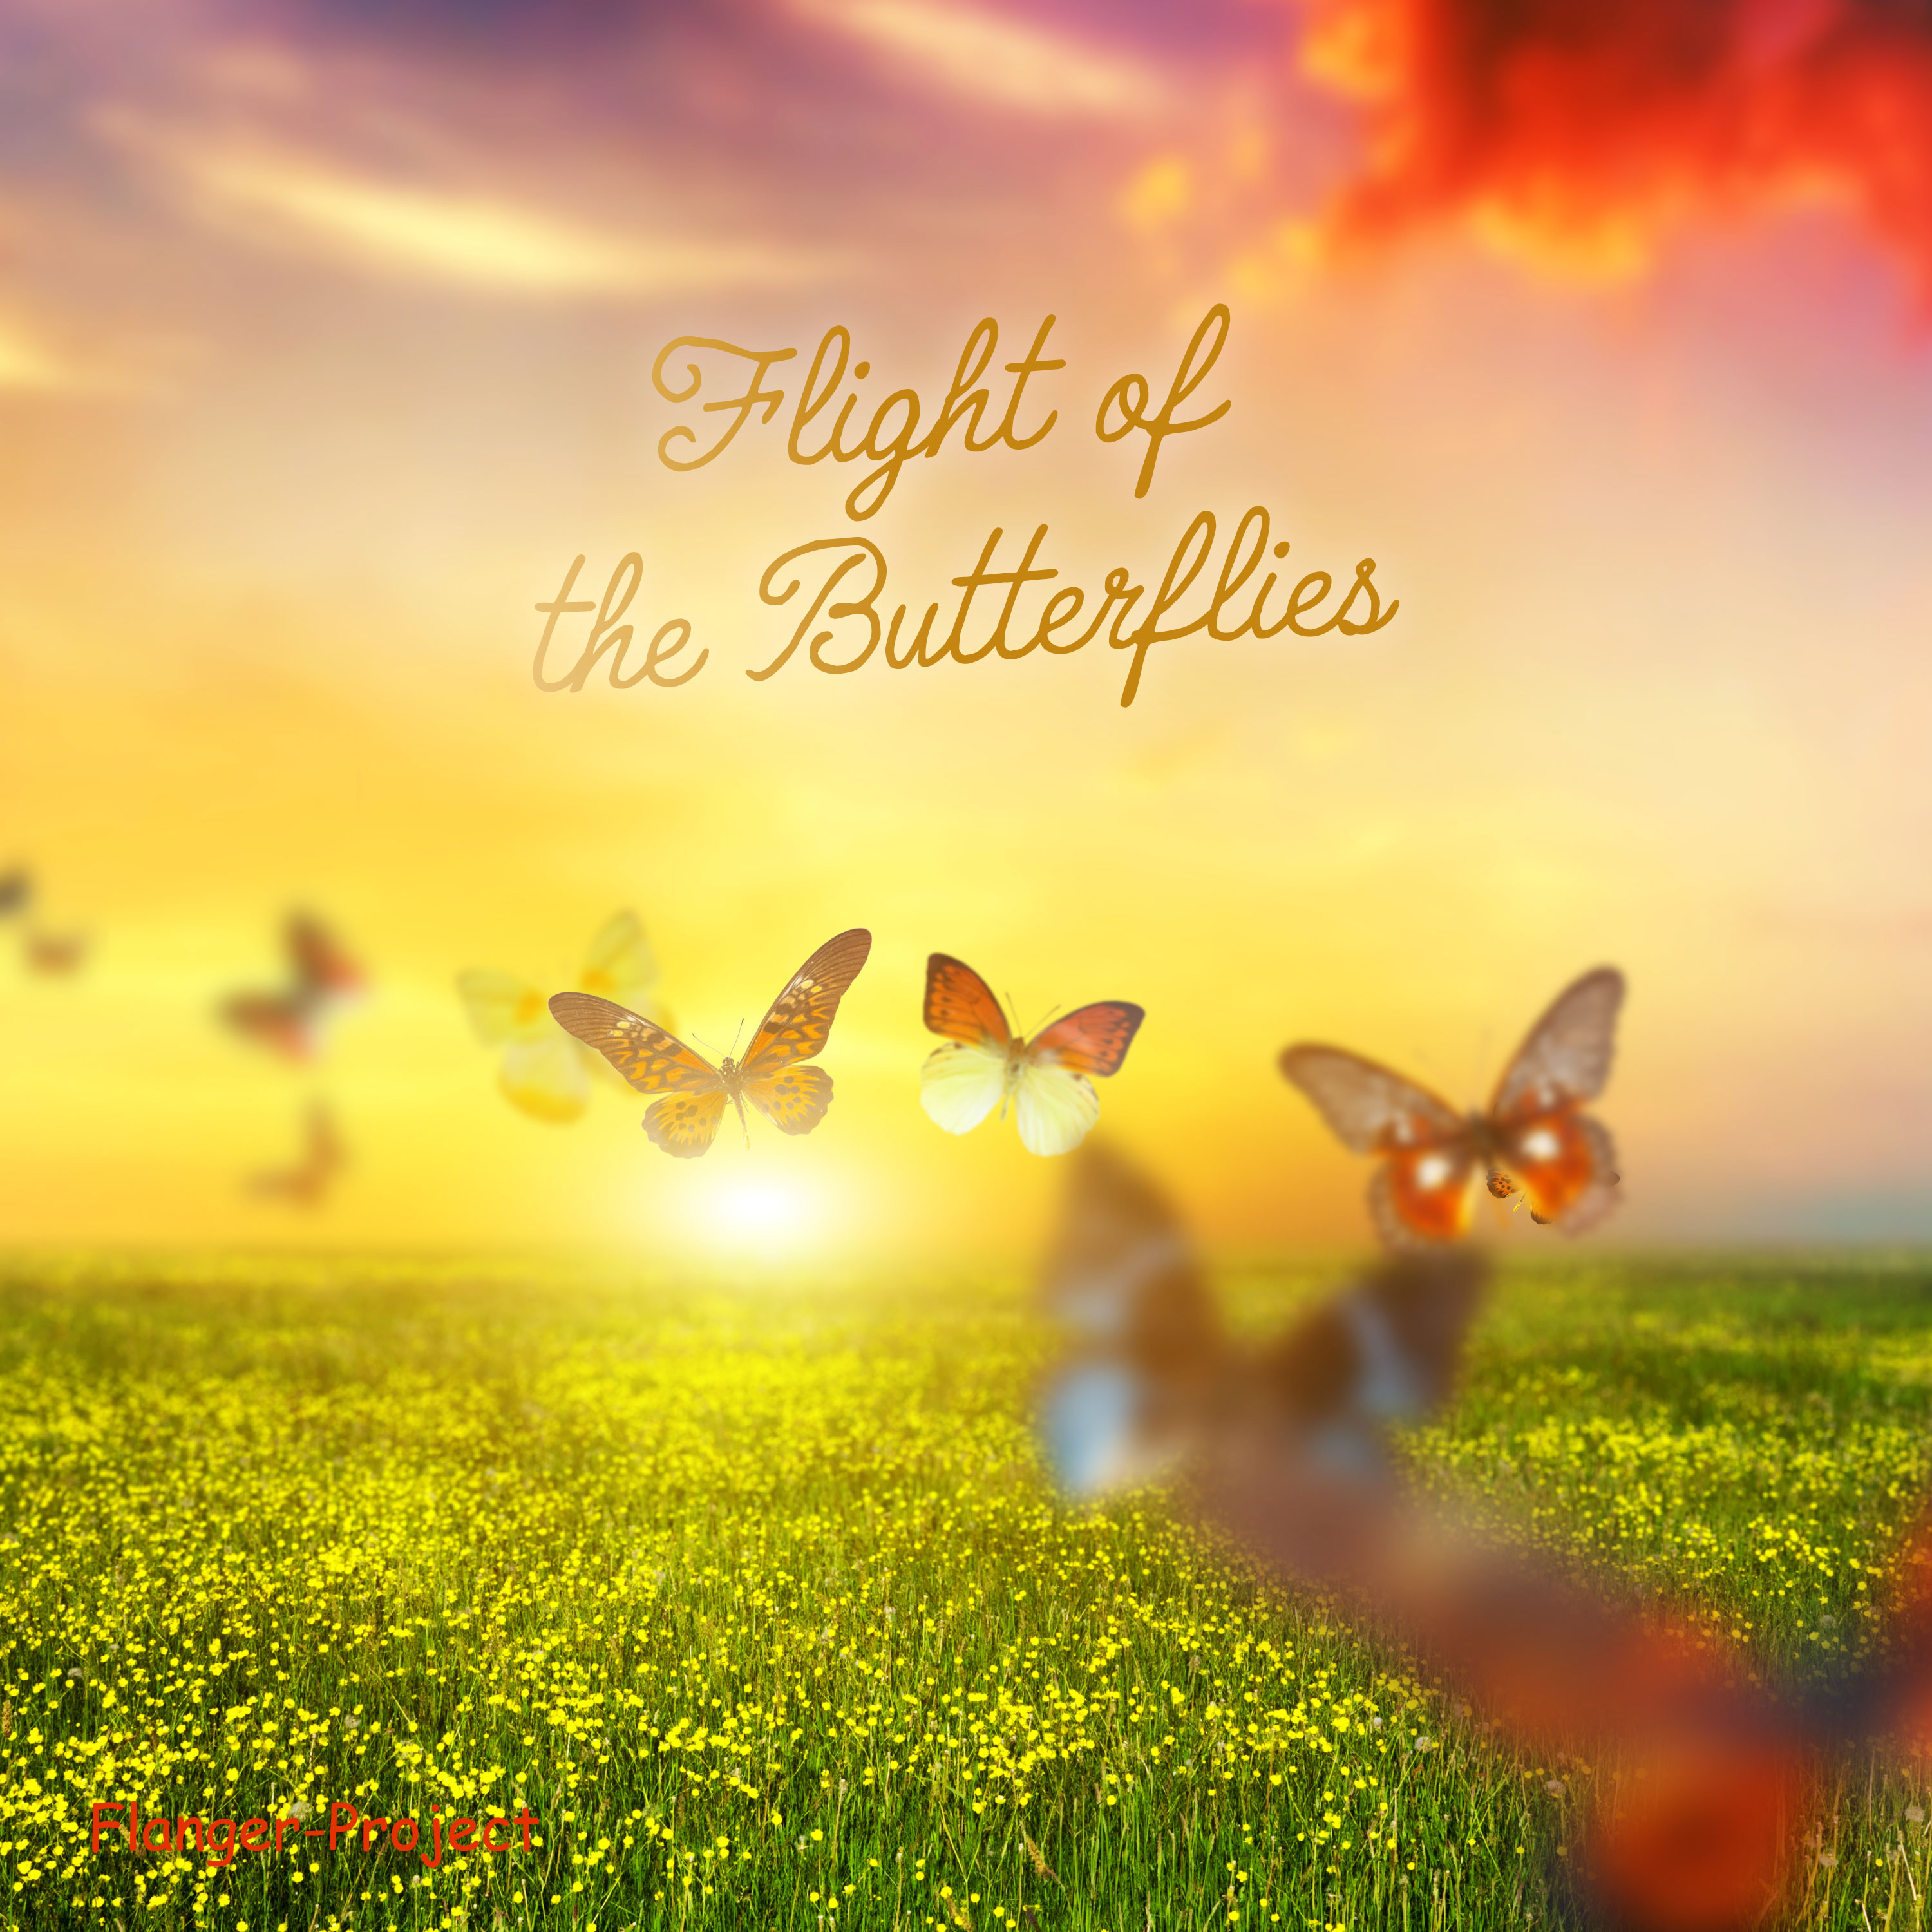 Flight of the Butterflies
maxi single
Release late-summer 2018